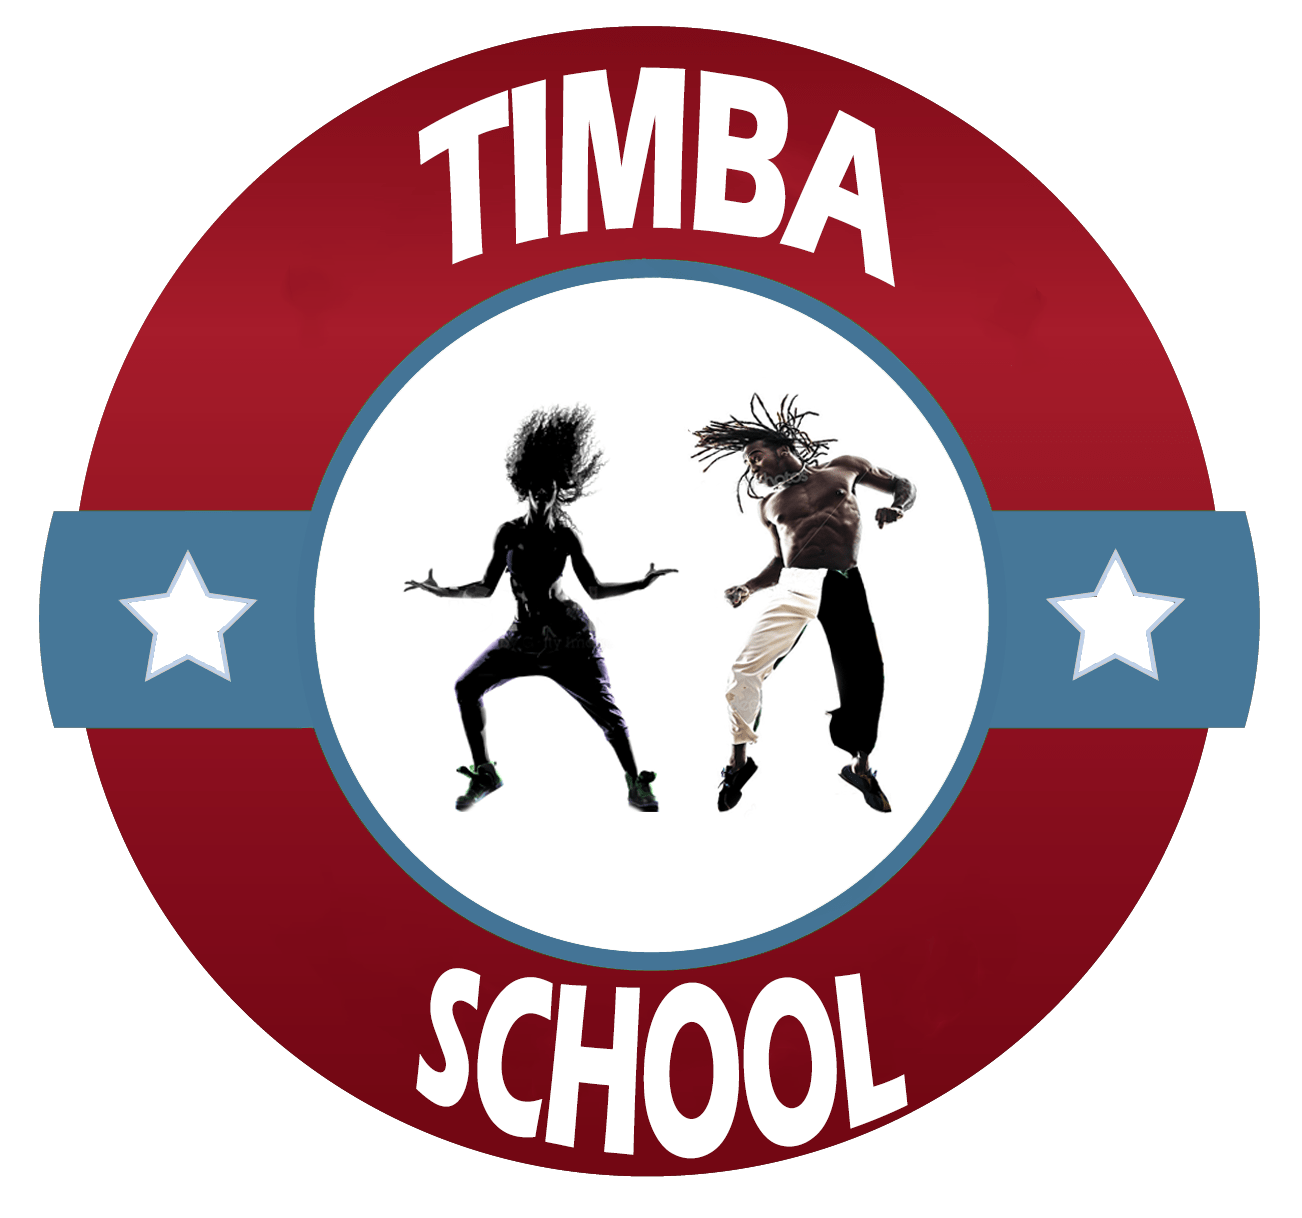 TIMBA SCHOOL